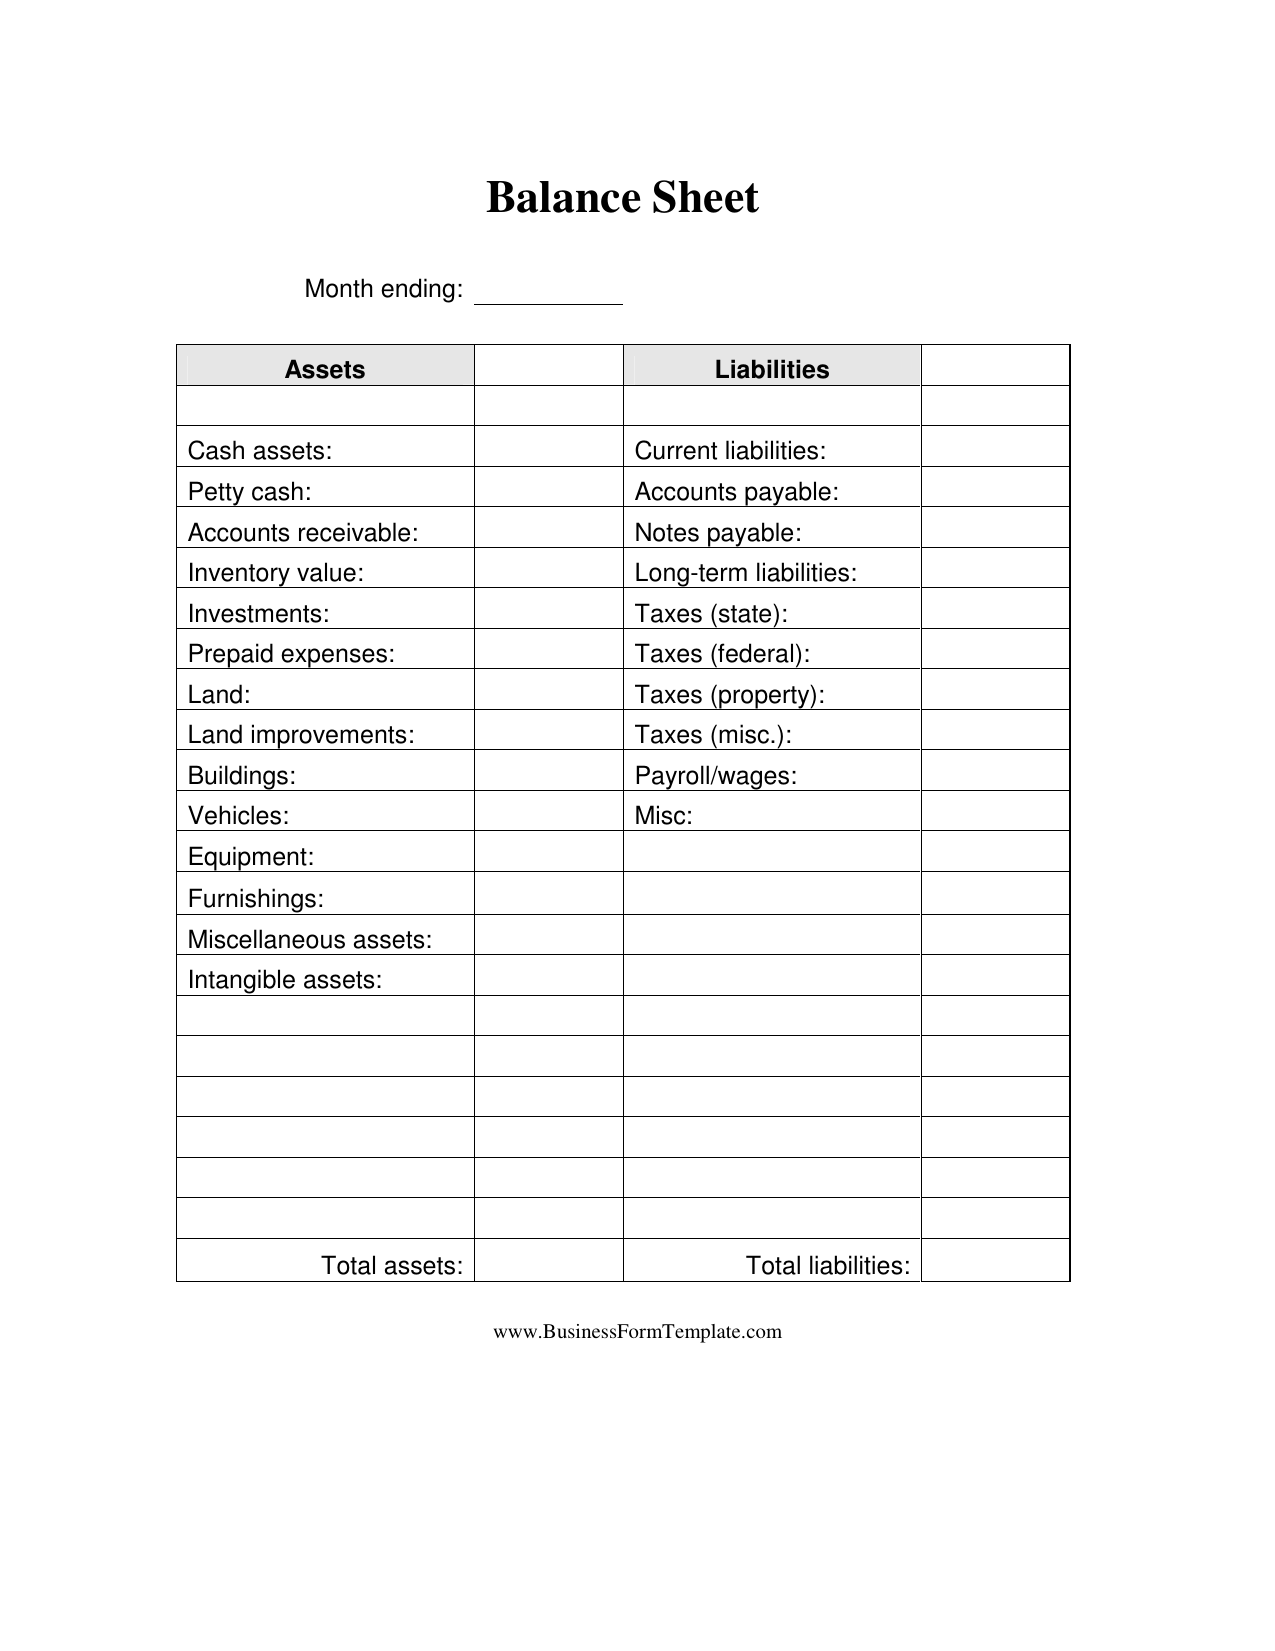 download-business-balance-sheet-template-excel-pdf-rtf-word-freedownloads